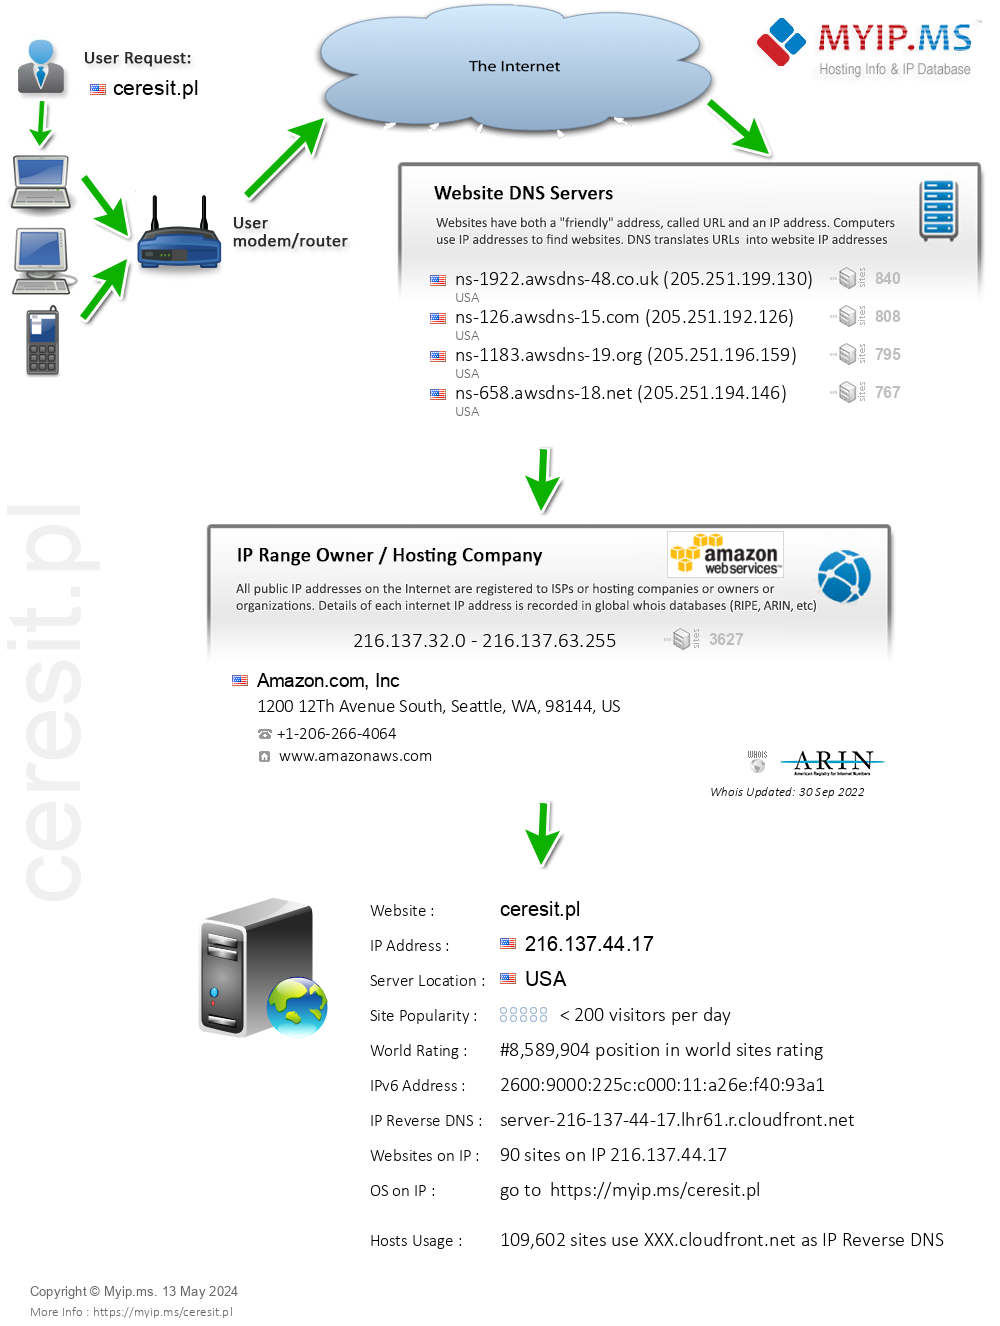 Ceresit.pl - Website Hosting Visual IP Diagram